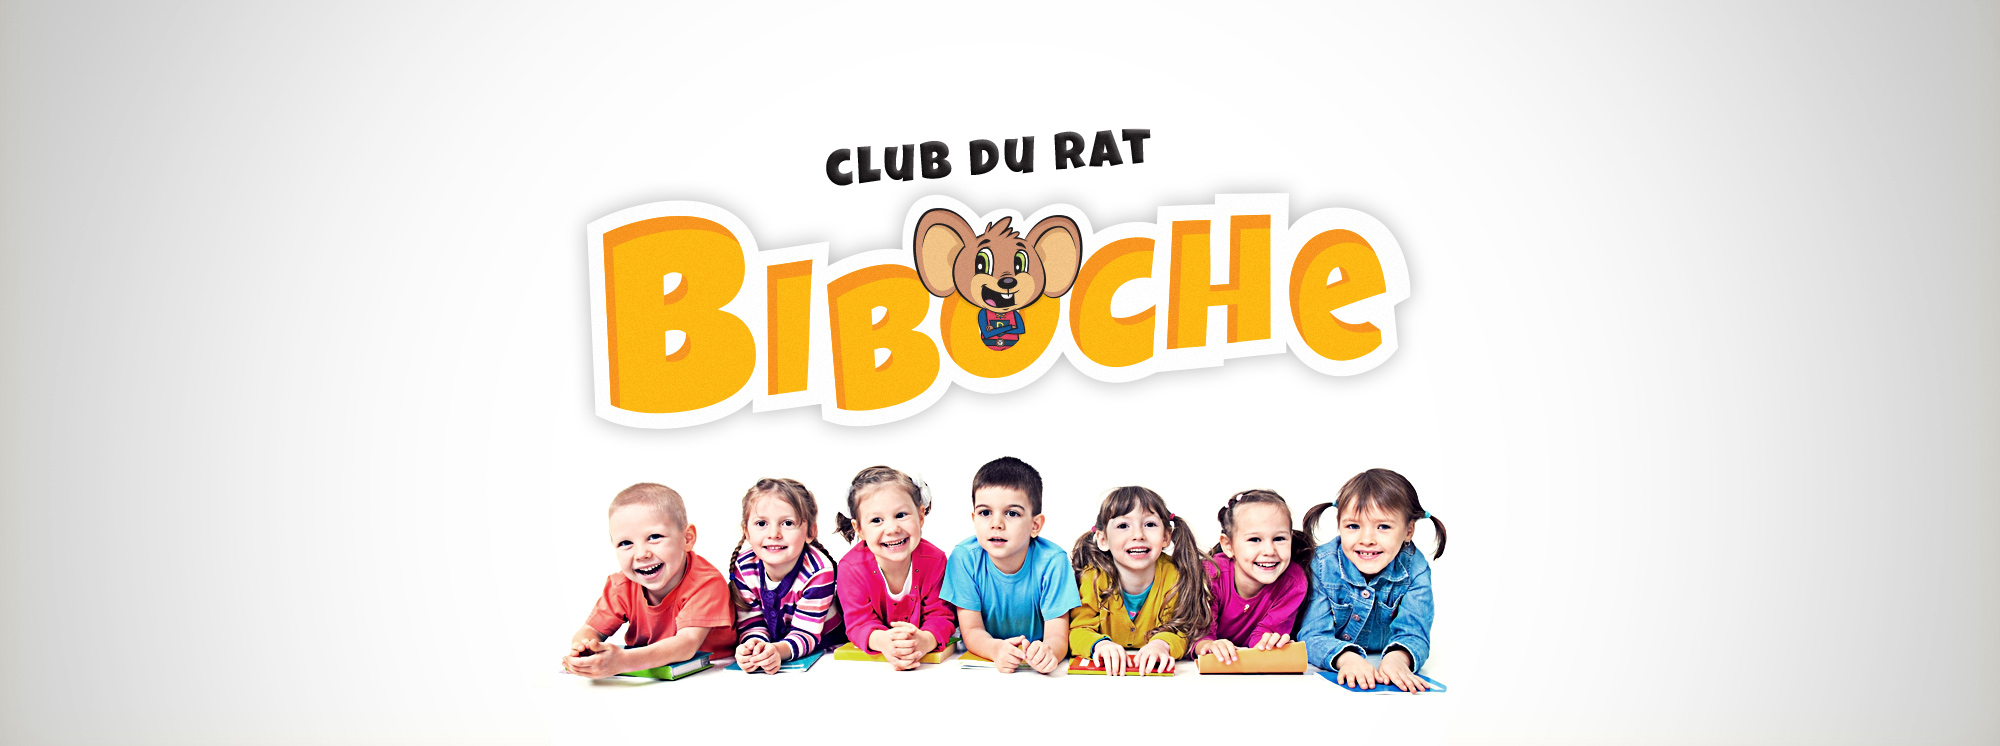 Club du rat Biboche